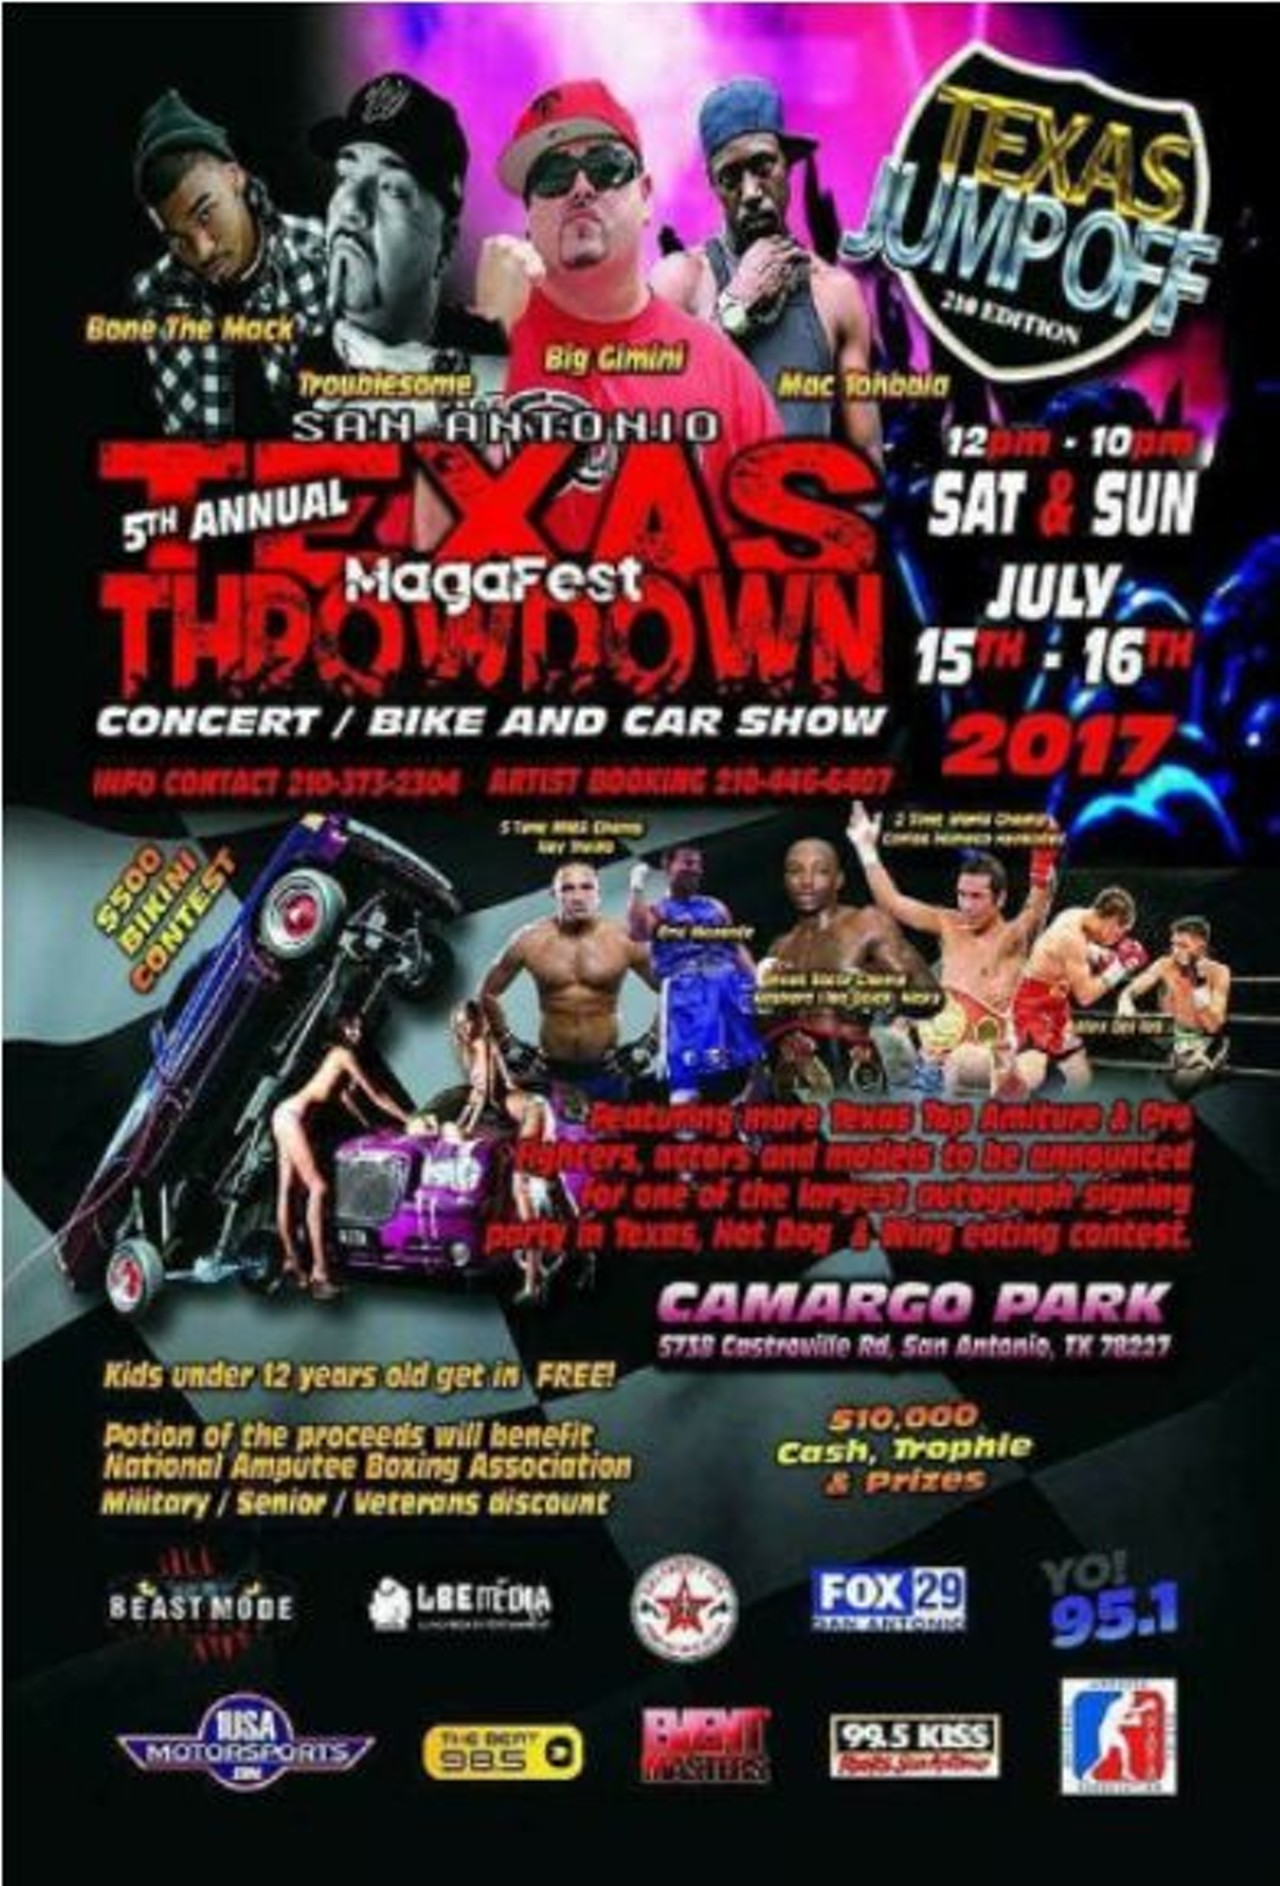 Texas Throwdown Mega Media Fest 
Sat., July 15, 12-10 p.m. and Sun., July 16, 12-10 p.m., $25, Camargo Park